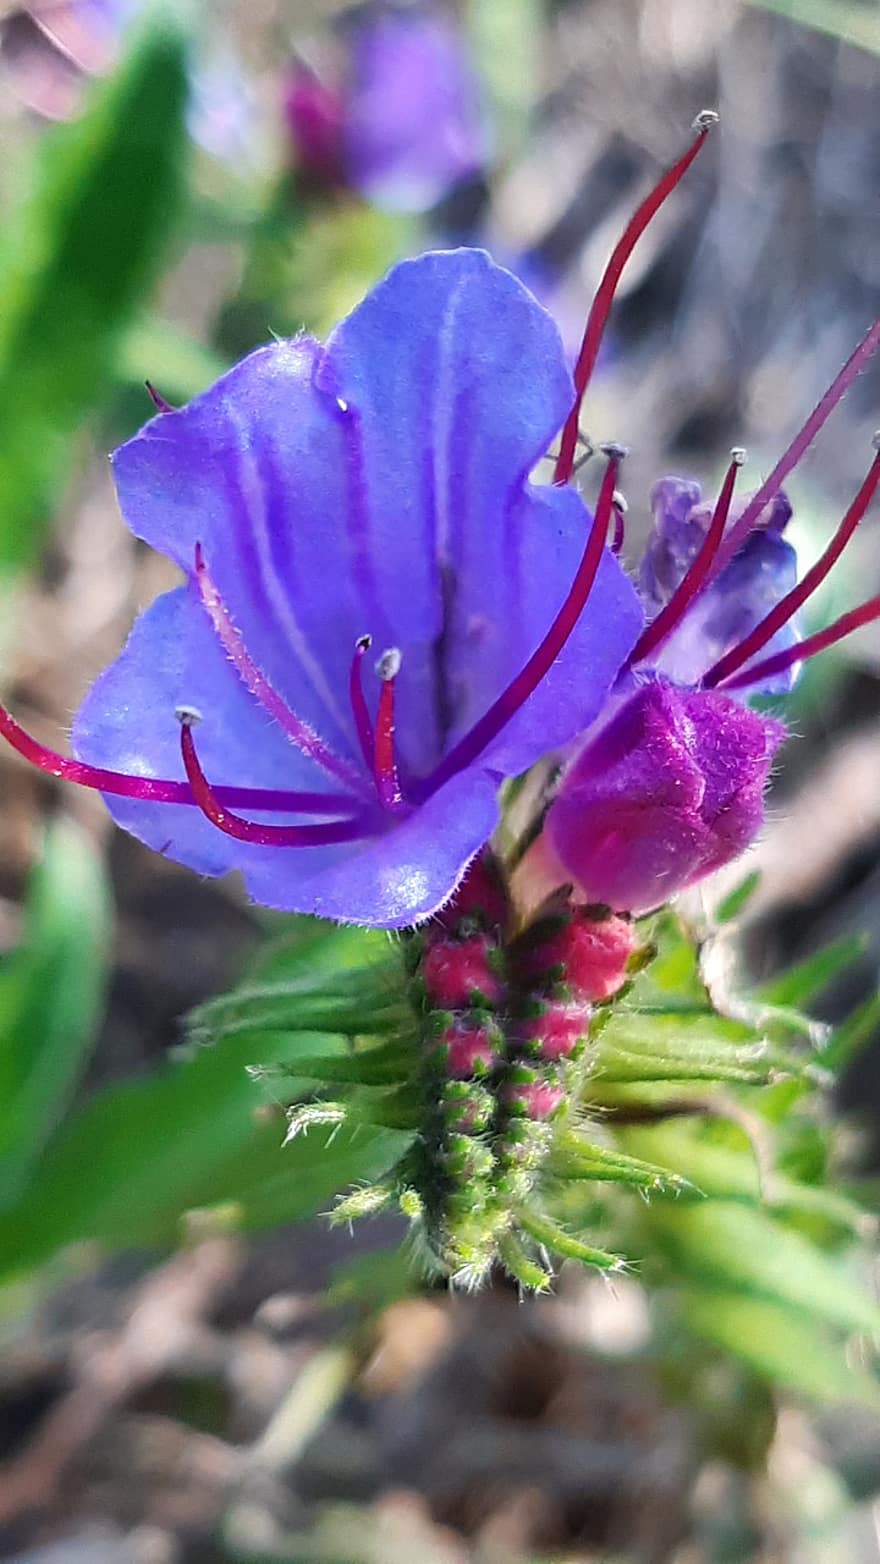 viper bugloss, virág, növény, bimbó, echium vulgare, blueweed, kék bogáncs, kék virág, virágzás, vadvirág, természet